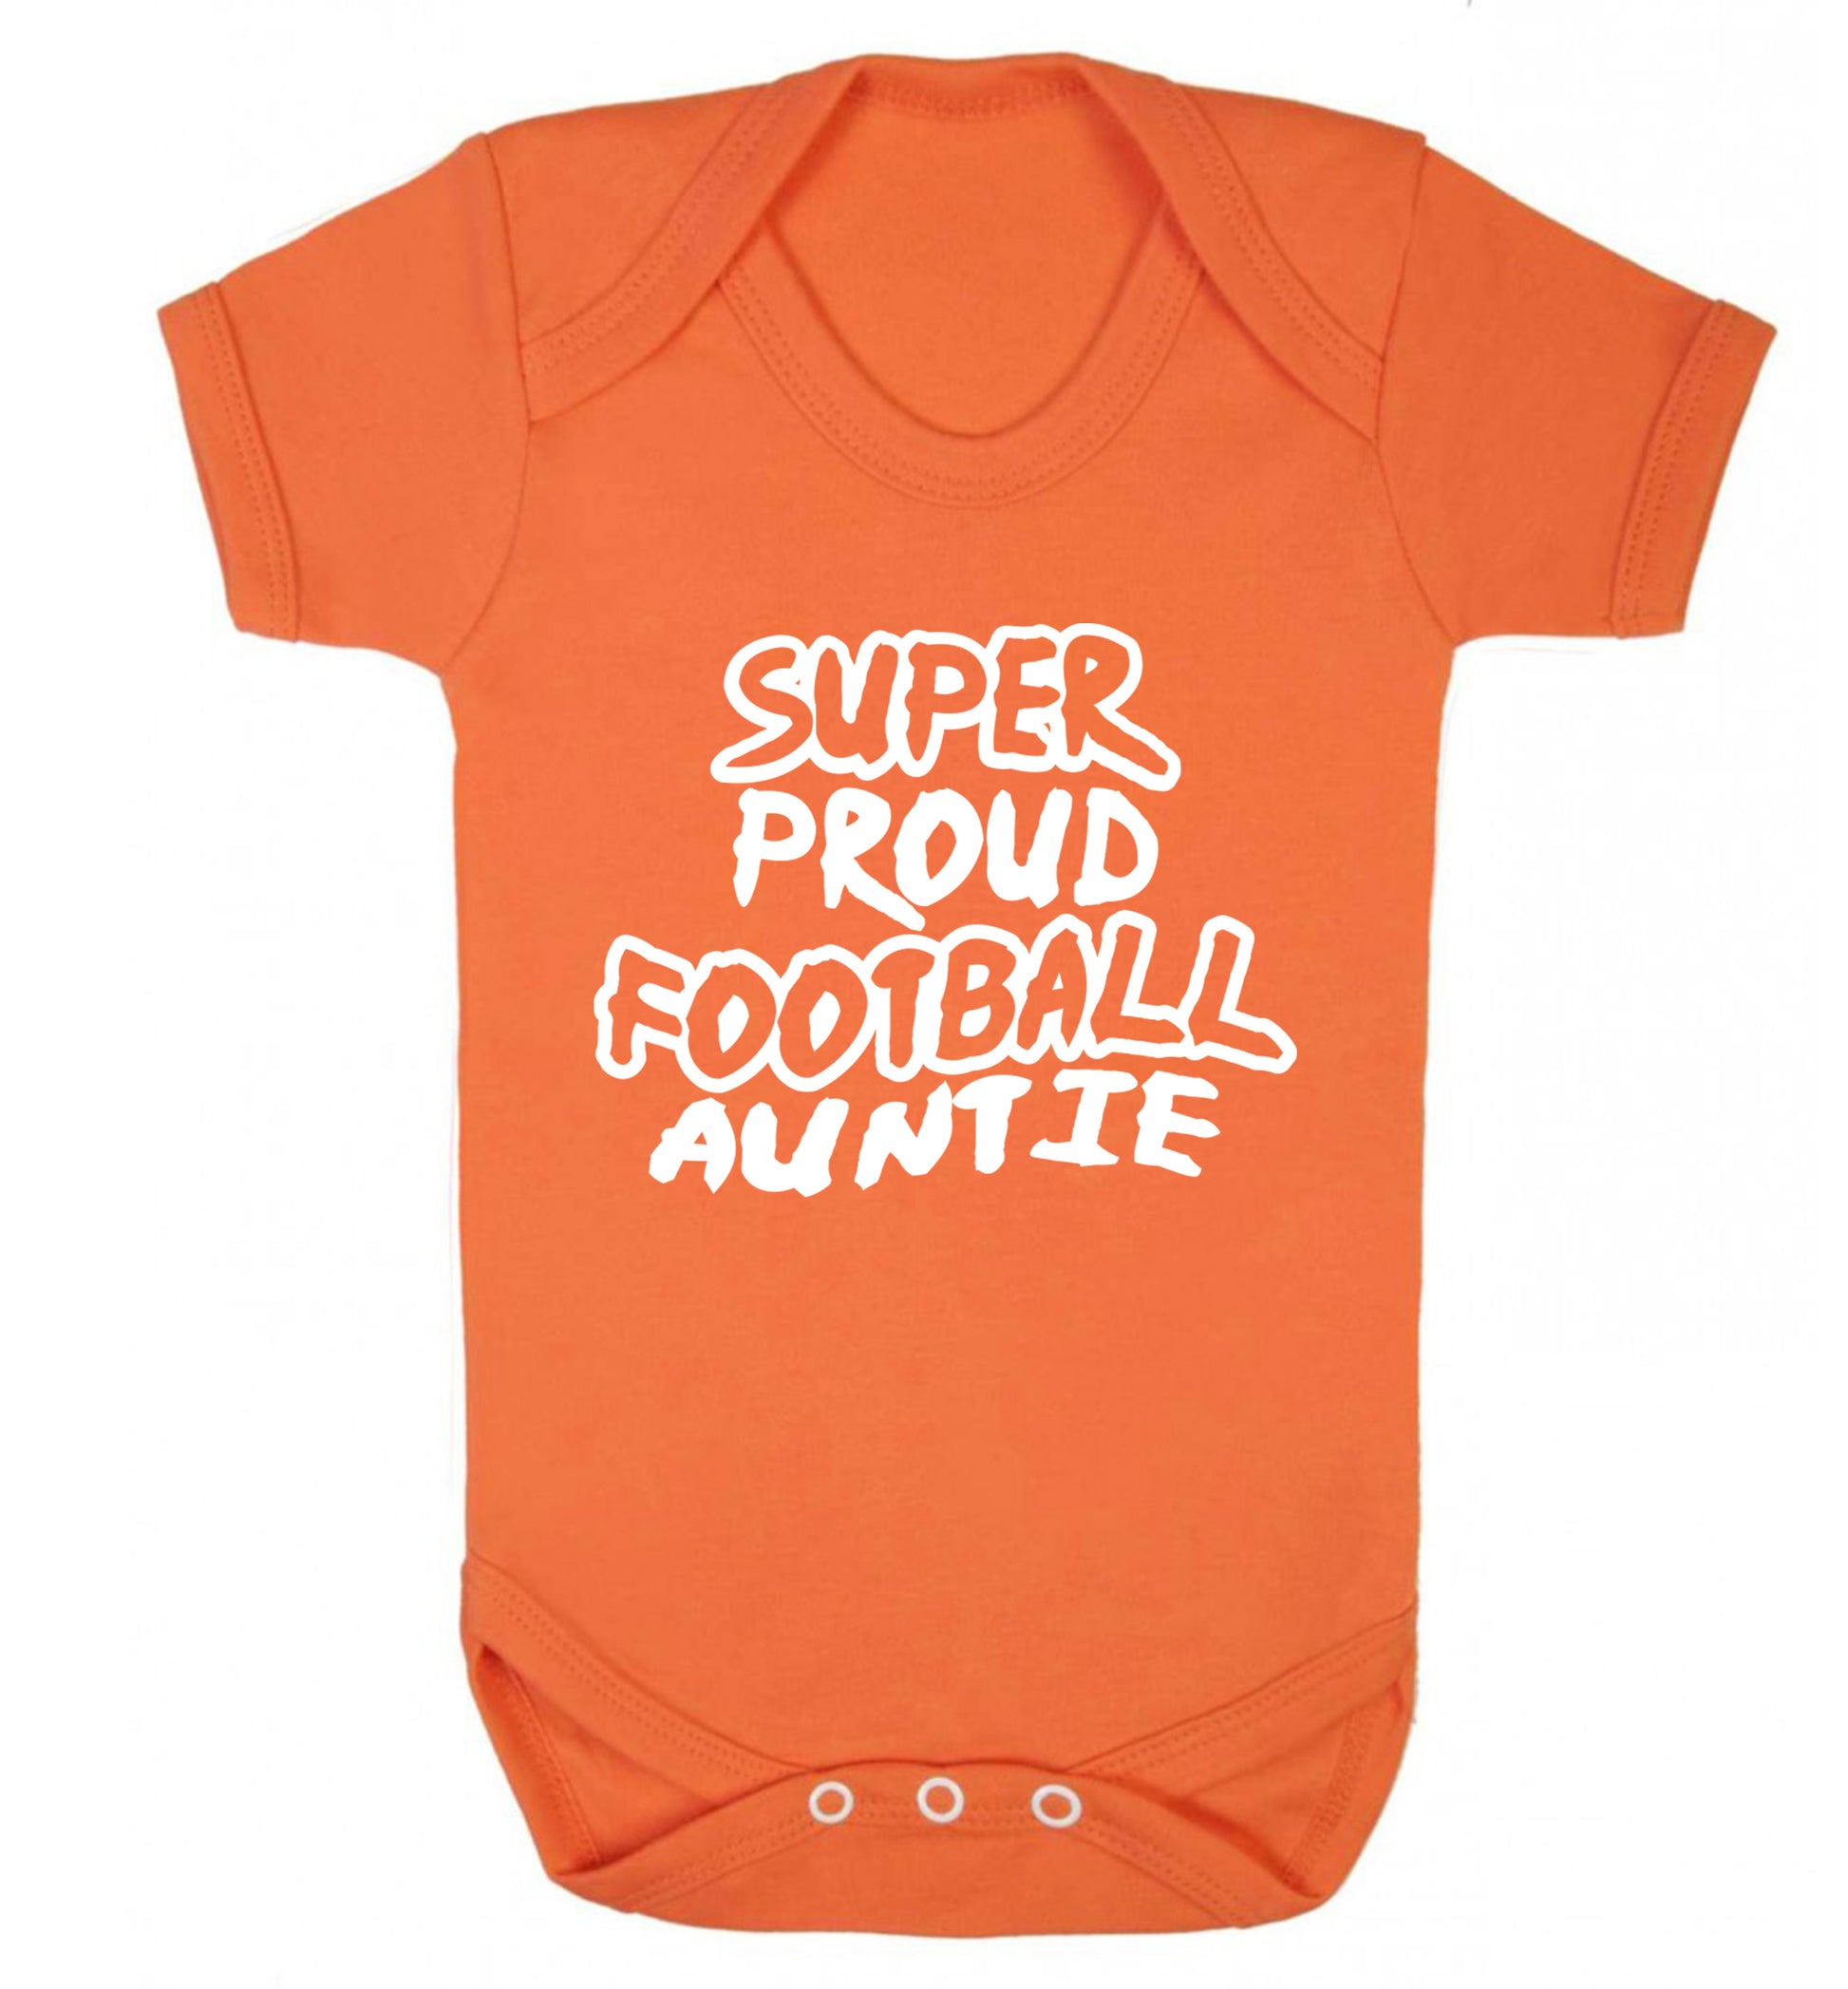 Super proud football auntie Baby Vest orange 18-24 months